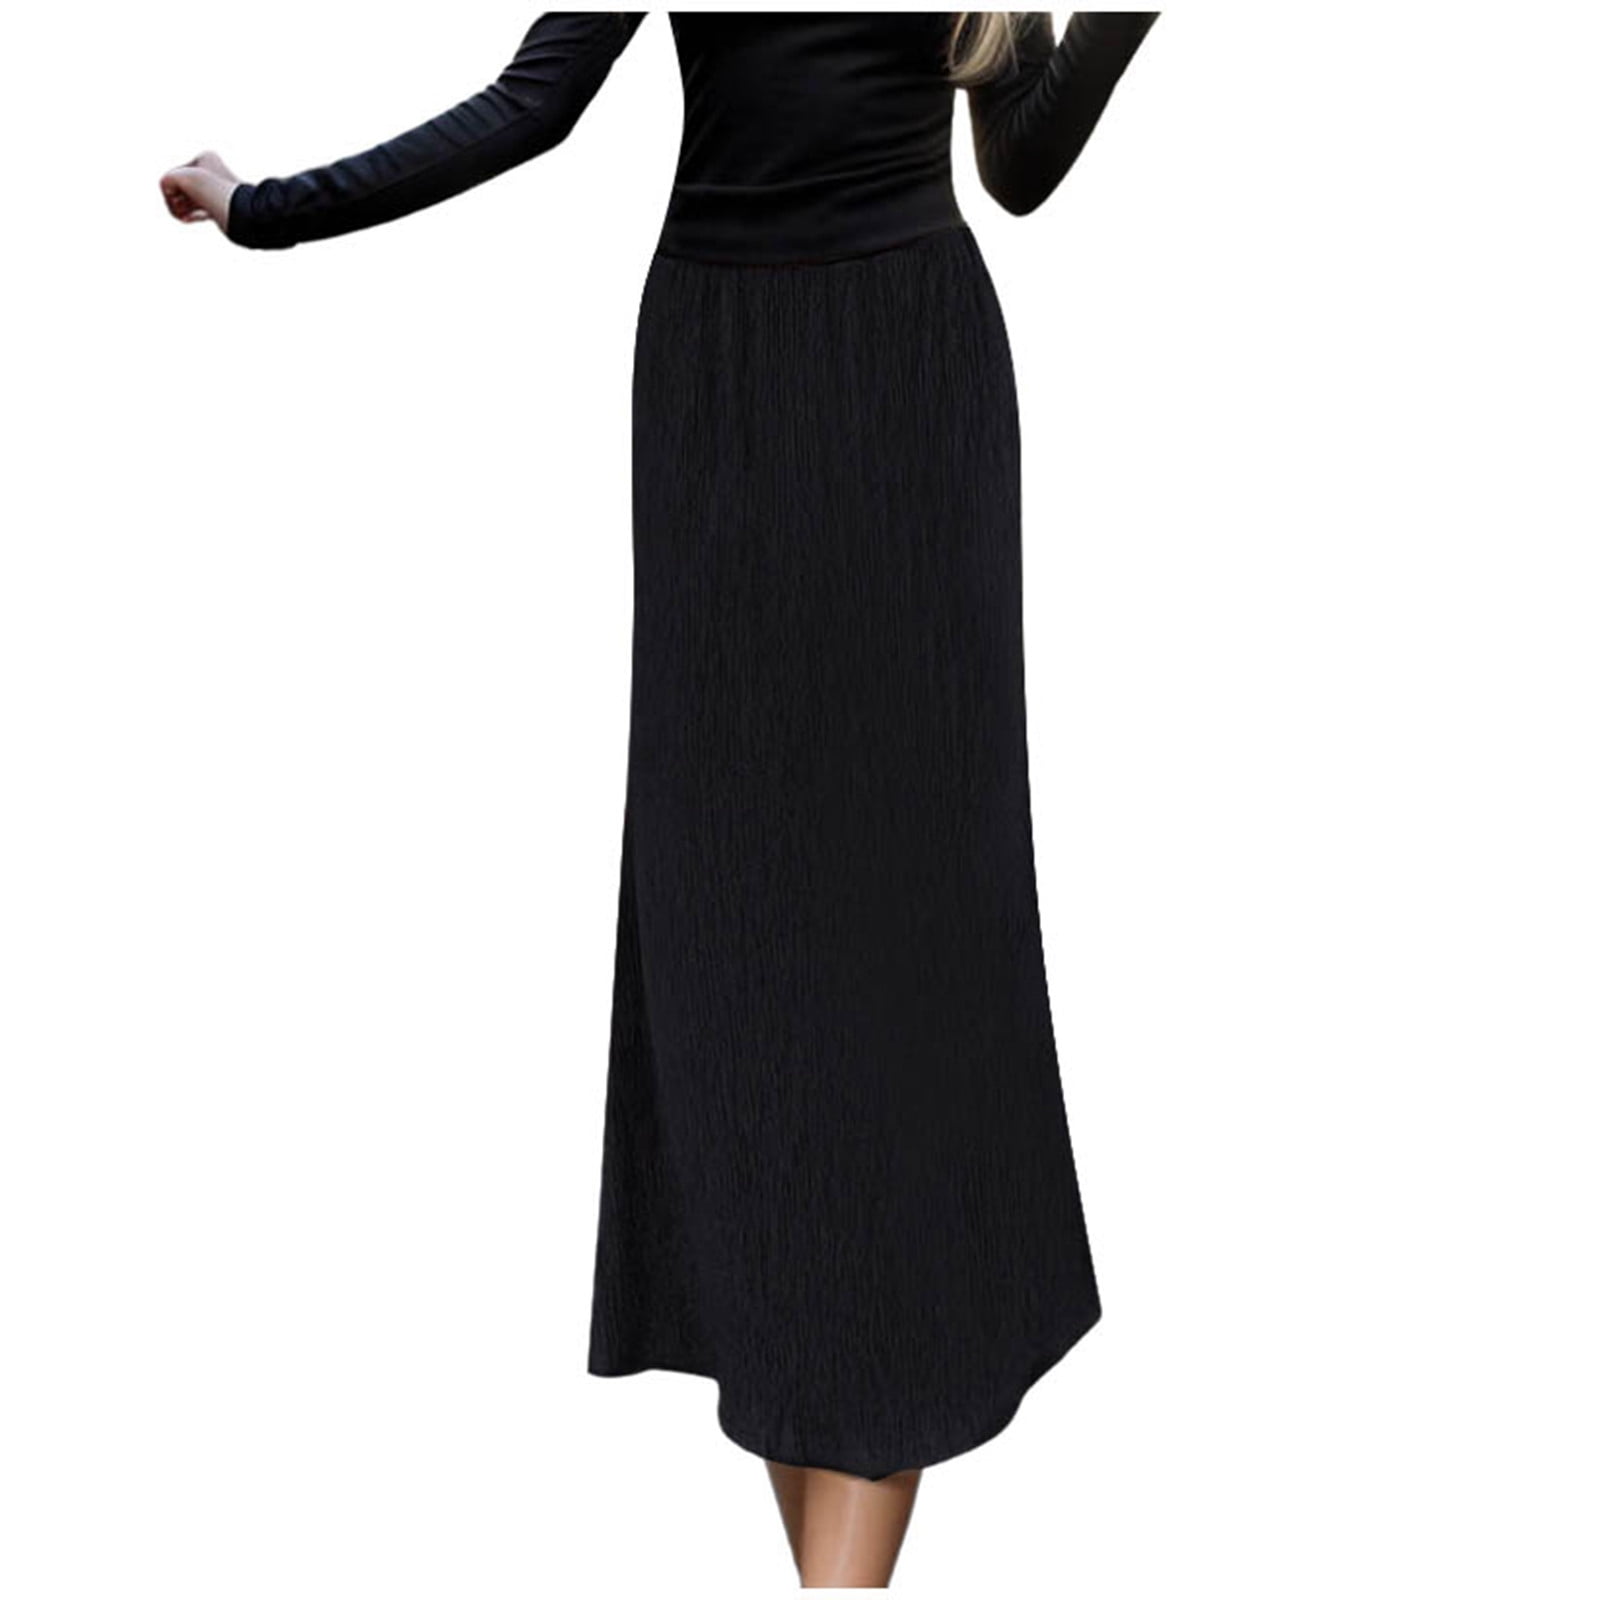 Universal Side Skirts Elegant Women's High Waist Midi Skirt Vintage ...